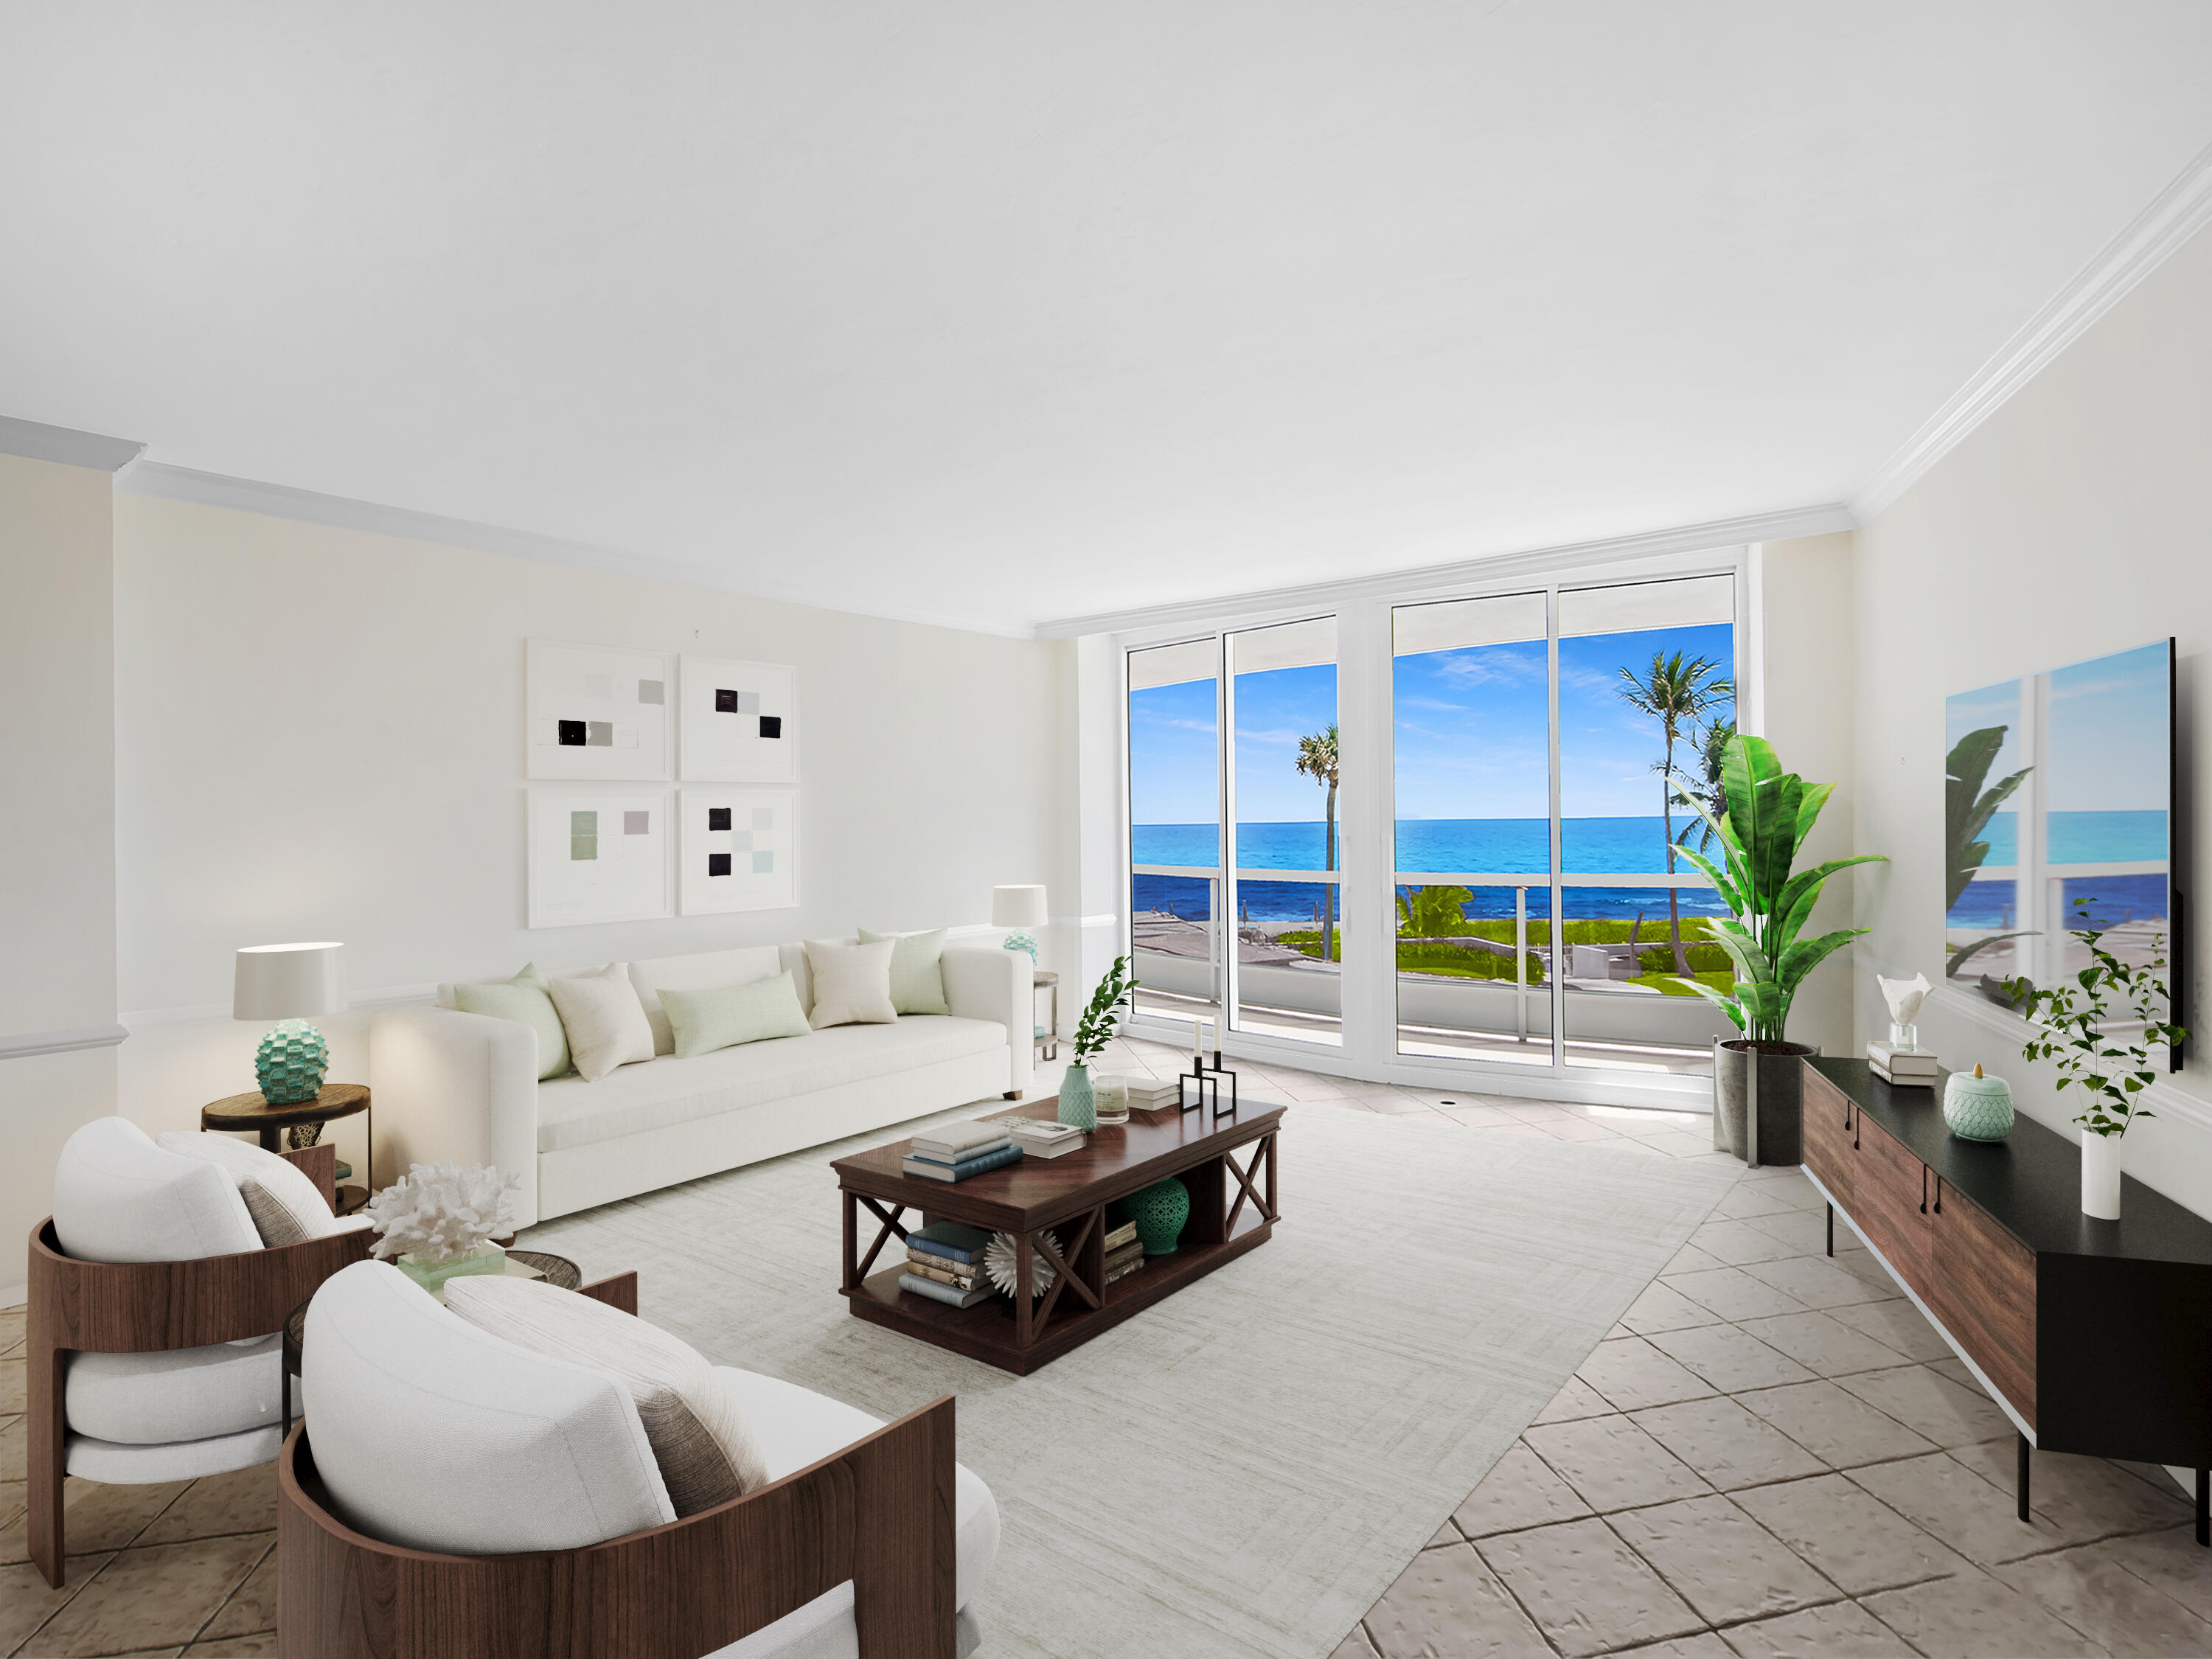 Property for Sale at 700 S Ocean Boulevard 204, Boca Raton, Palm Beach County, Florida - Bedrooms: 2 
Bathrooms: 2.5  - $1,149,000